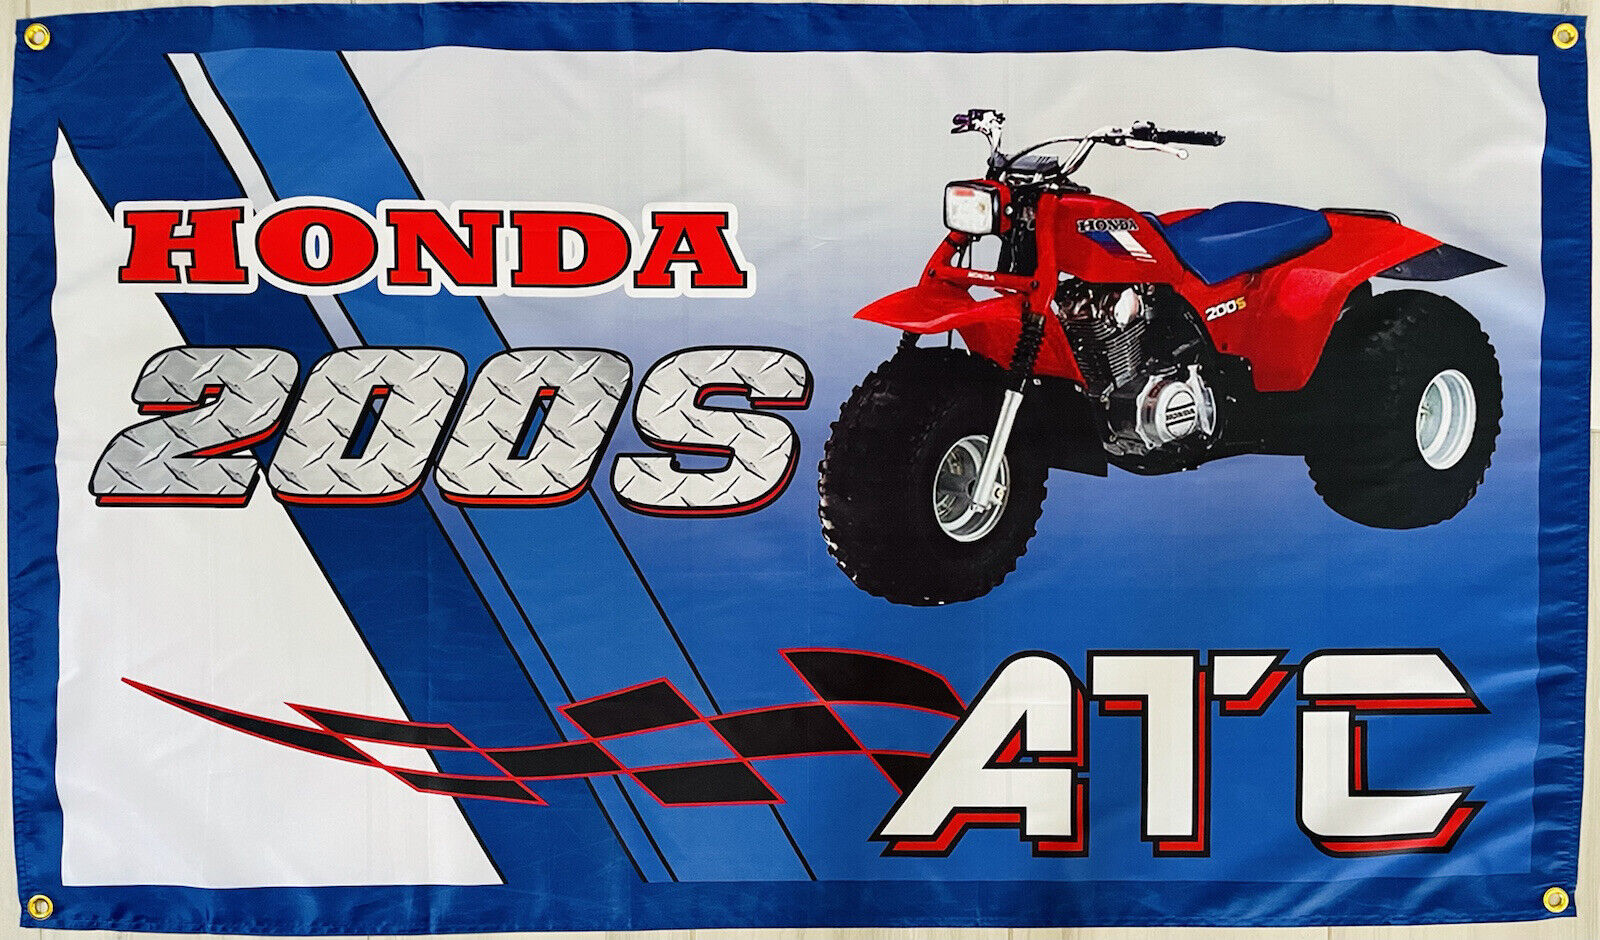 Honda 200S SX 250 ATV S ATC FLAG BANNER FLAG MAN CAVE GARAGE